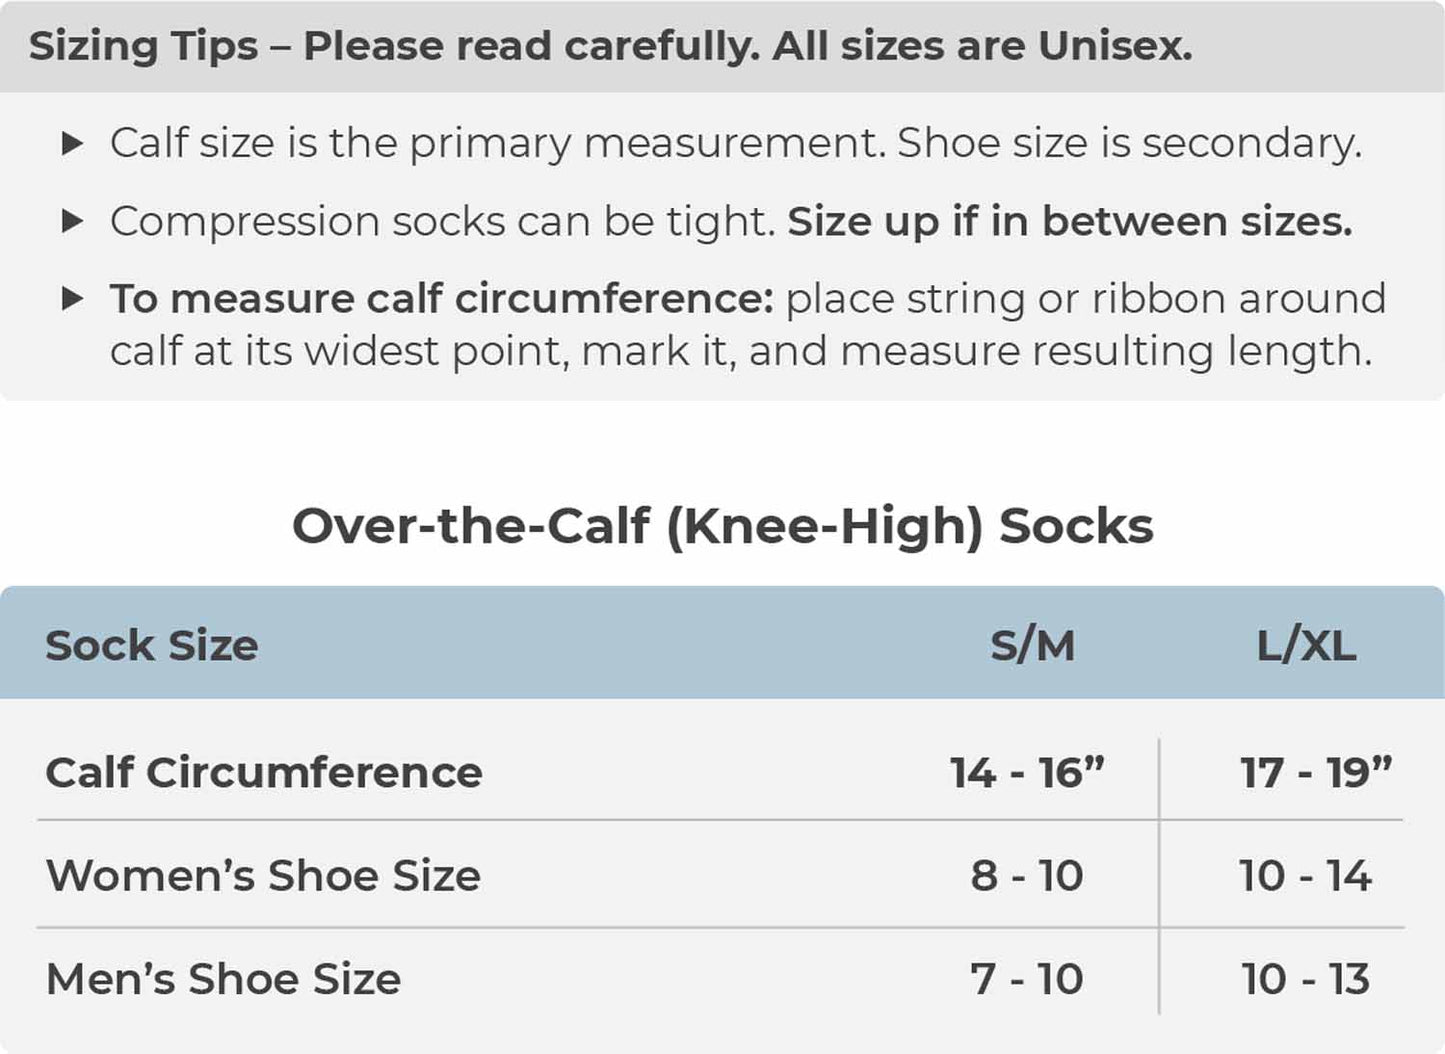 Dallas Cowboys NFL Adult Compression Socks - Navy